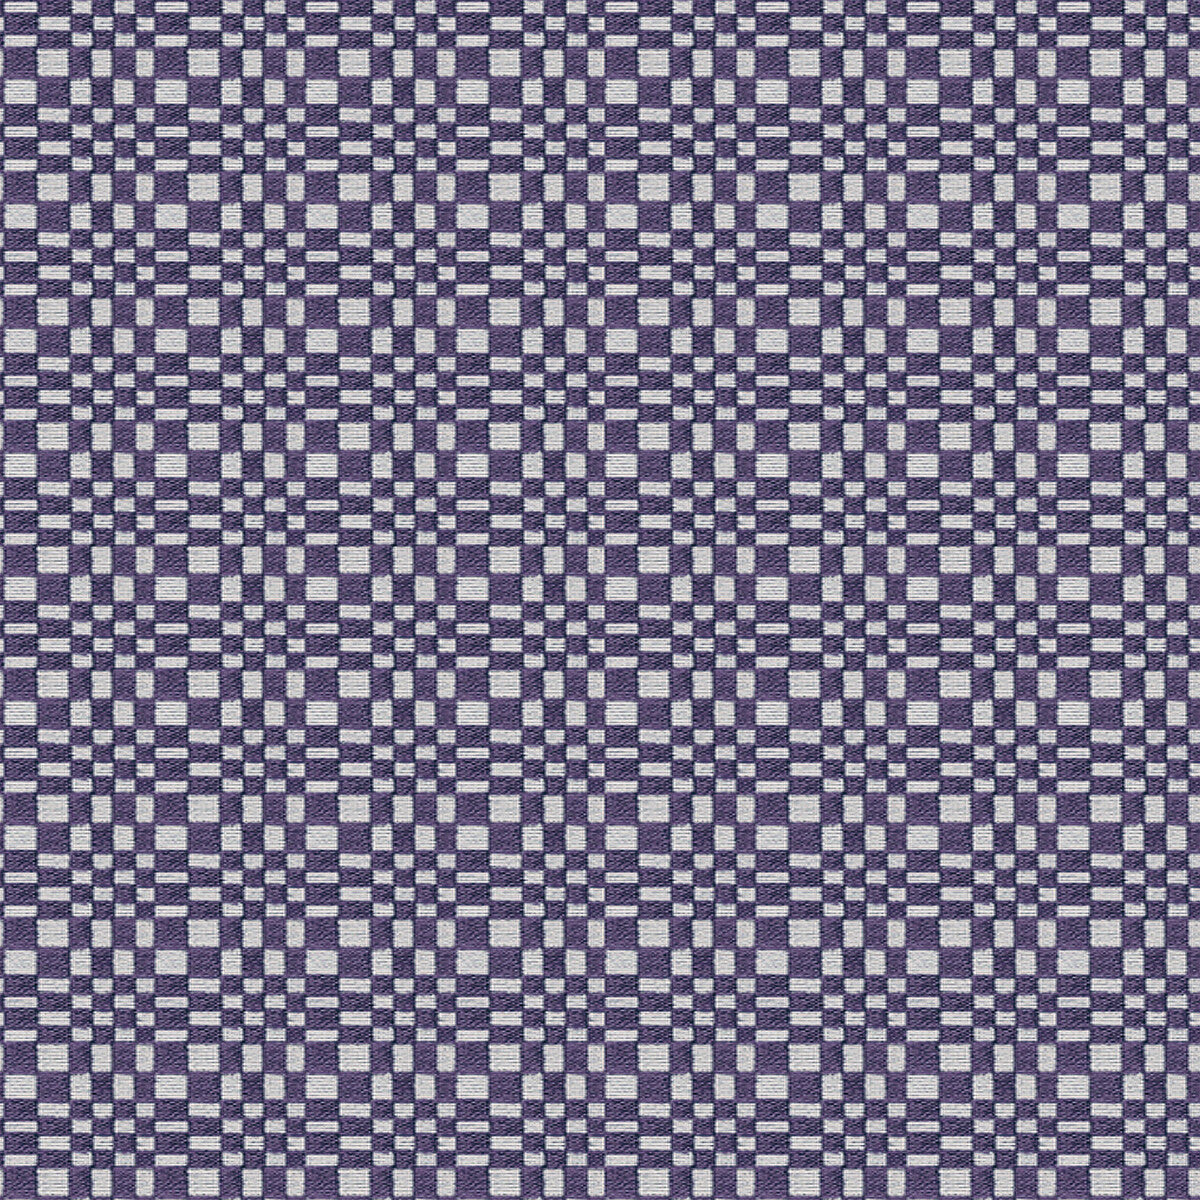 Santa Eulalia fabric in violeta color - pattern GDT5686.010.0 - by Gaston y Daniela in the Gaston Maiorica collection